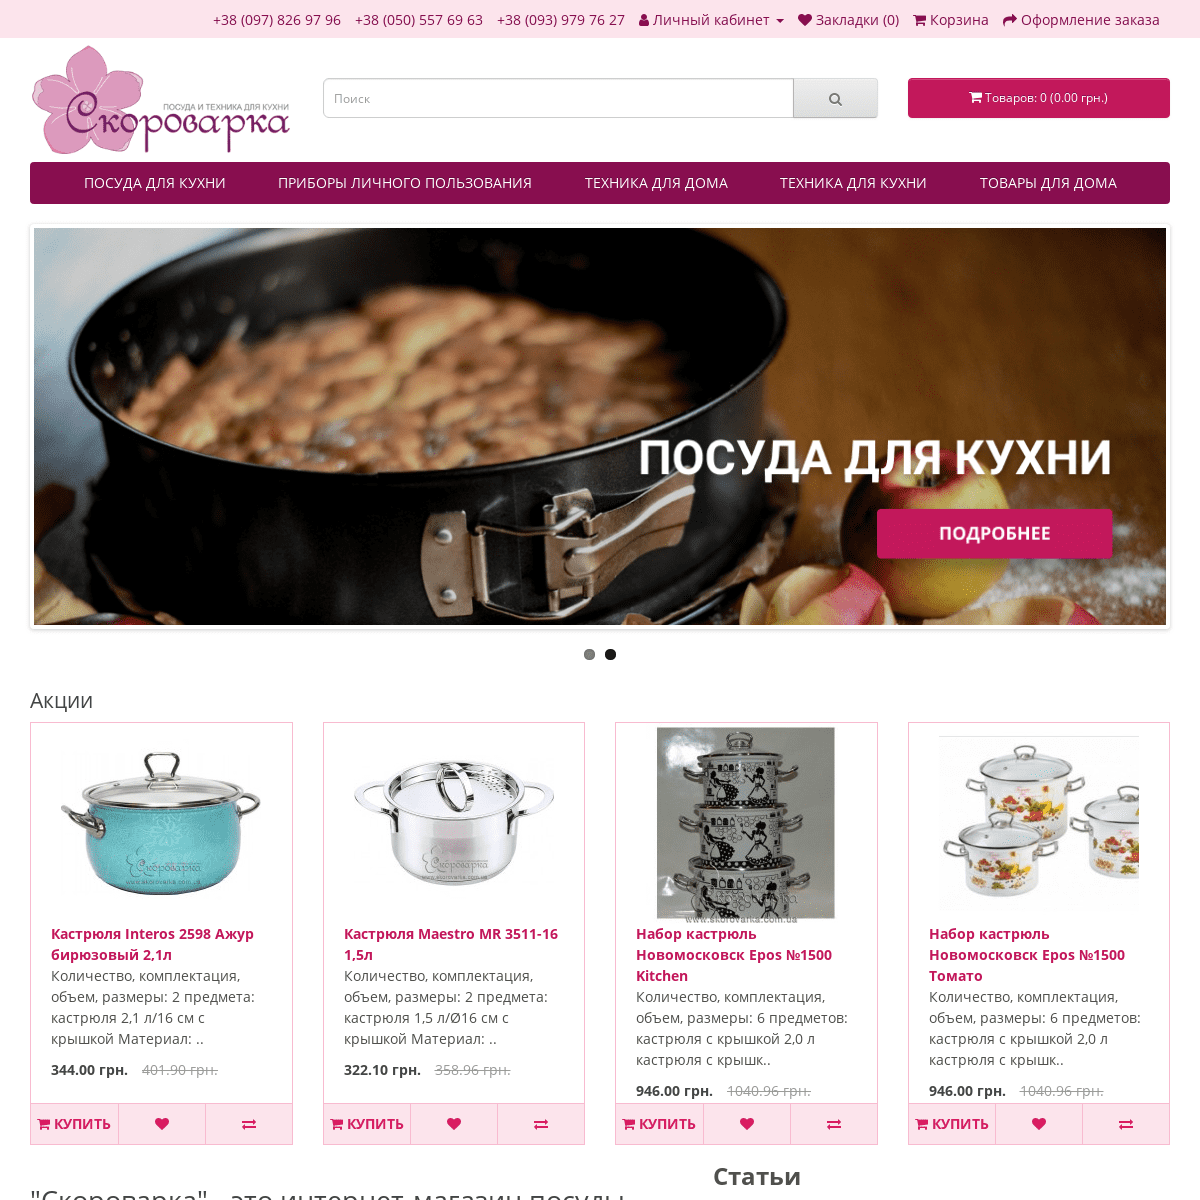 A complete backup of skorovarka.com.ua